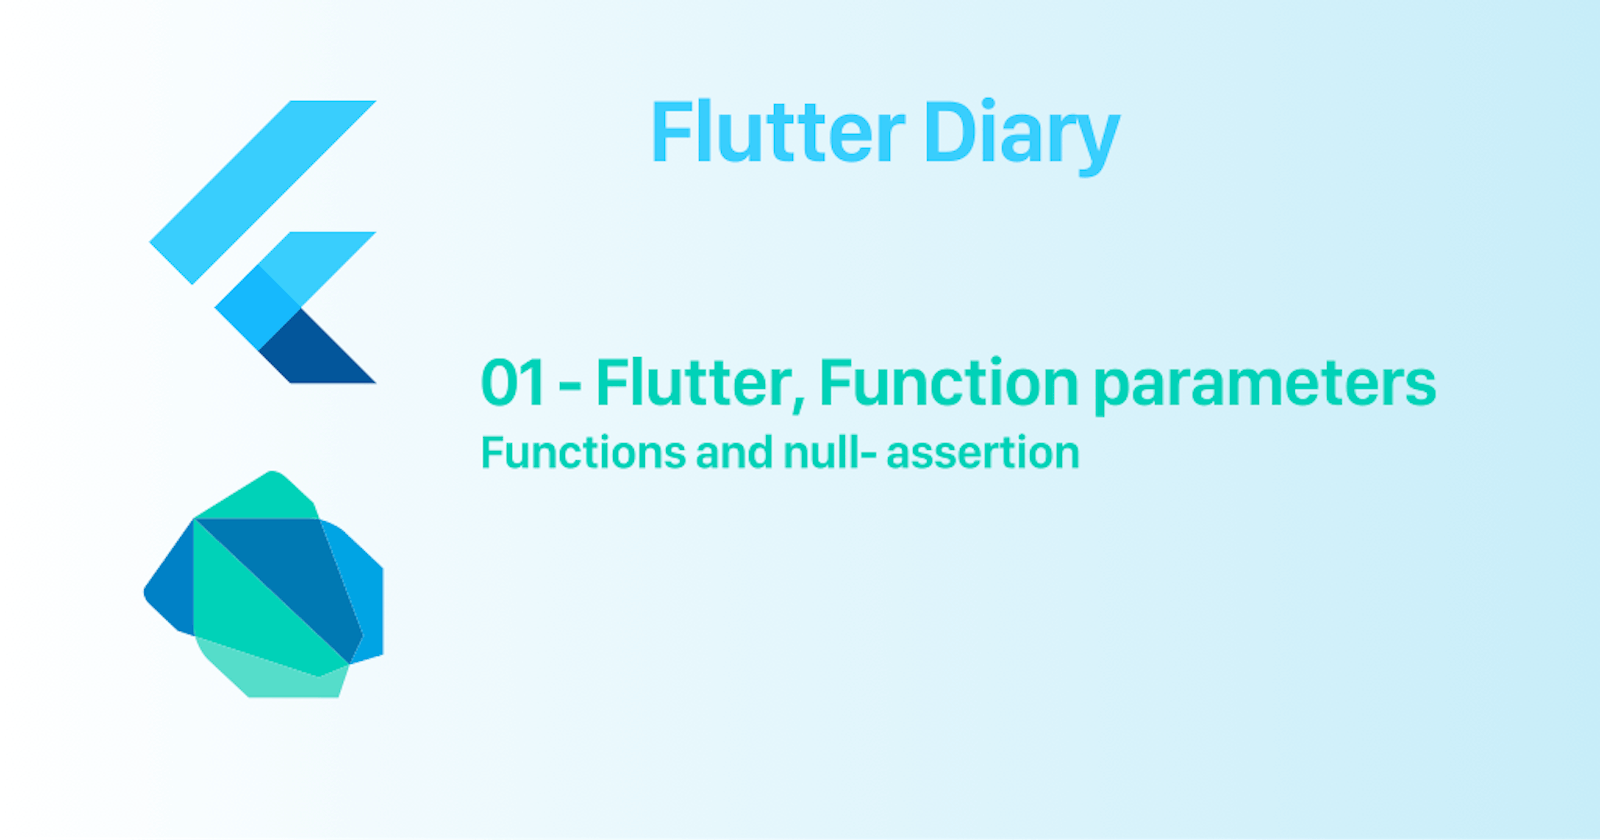 02 - Flutter, Function parameters